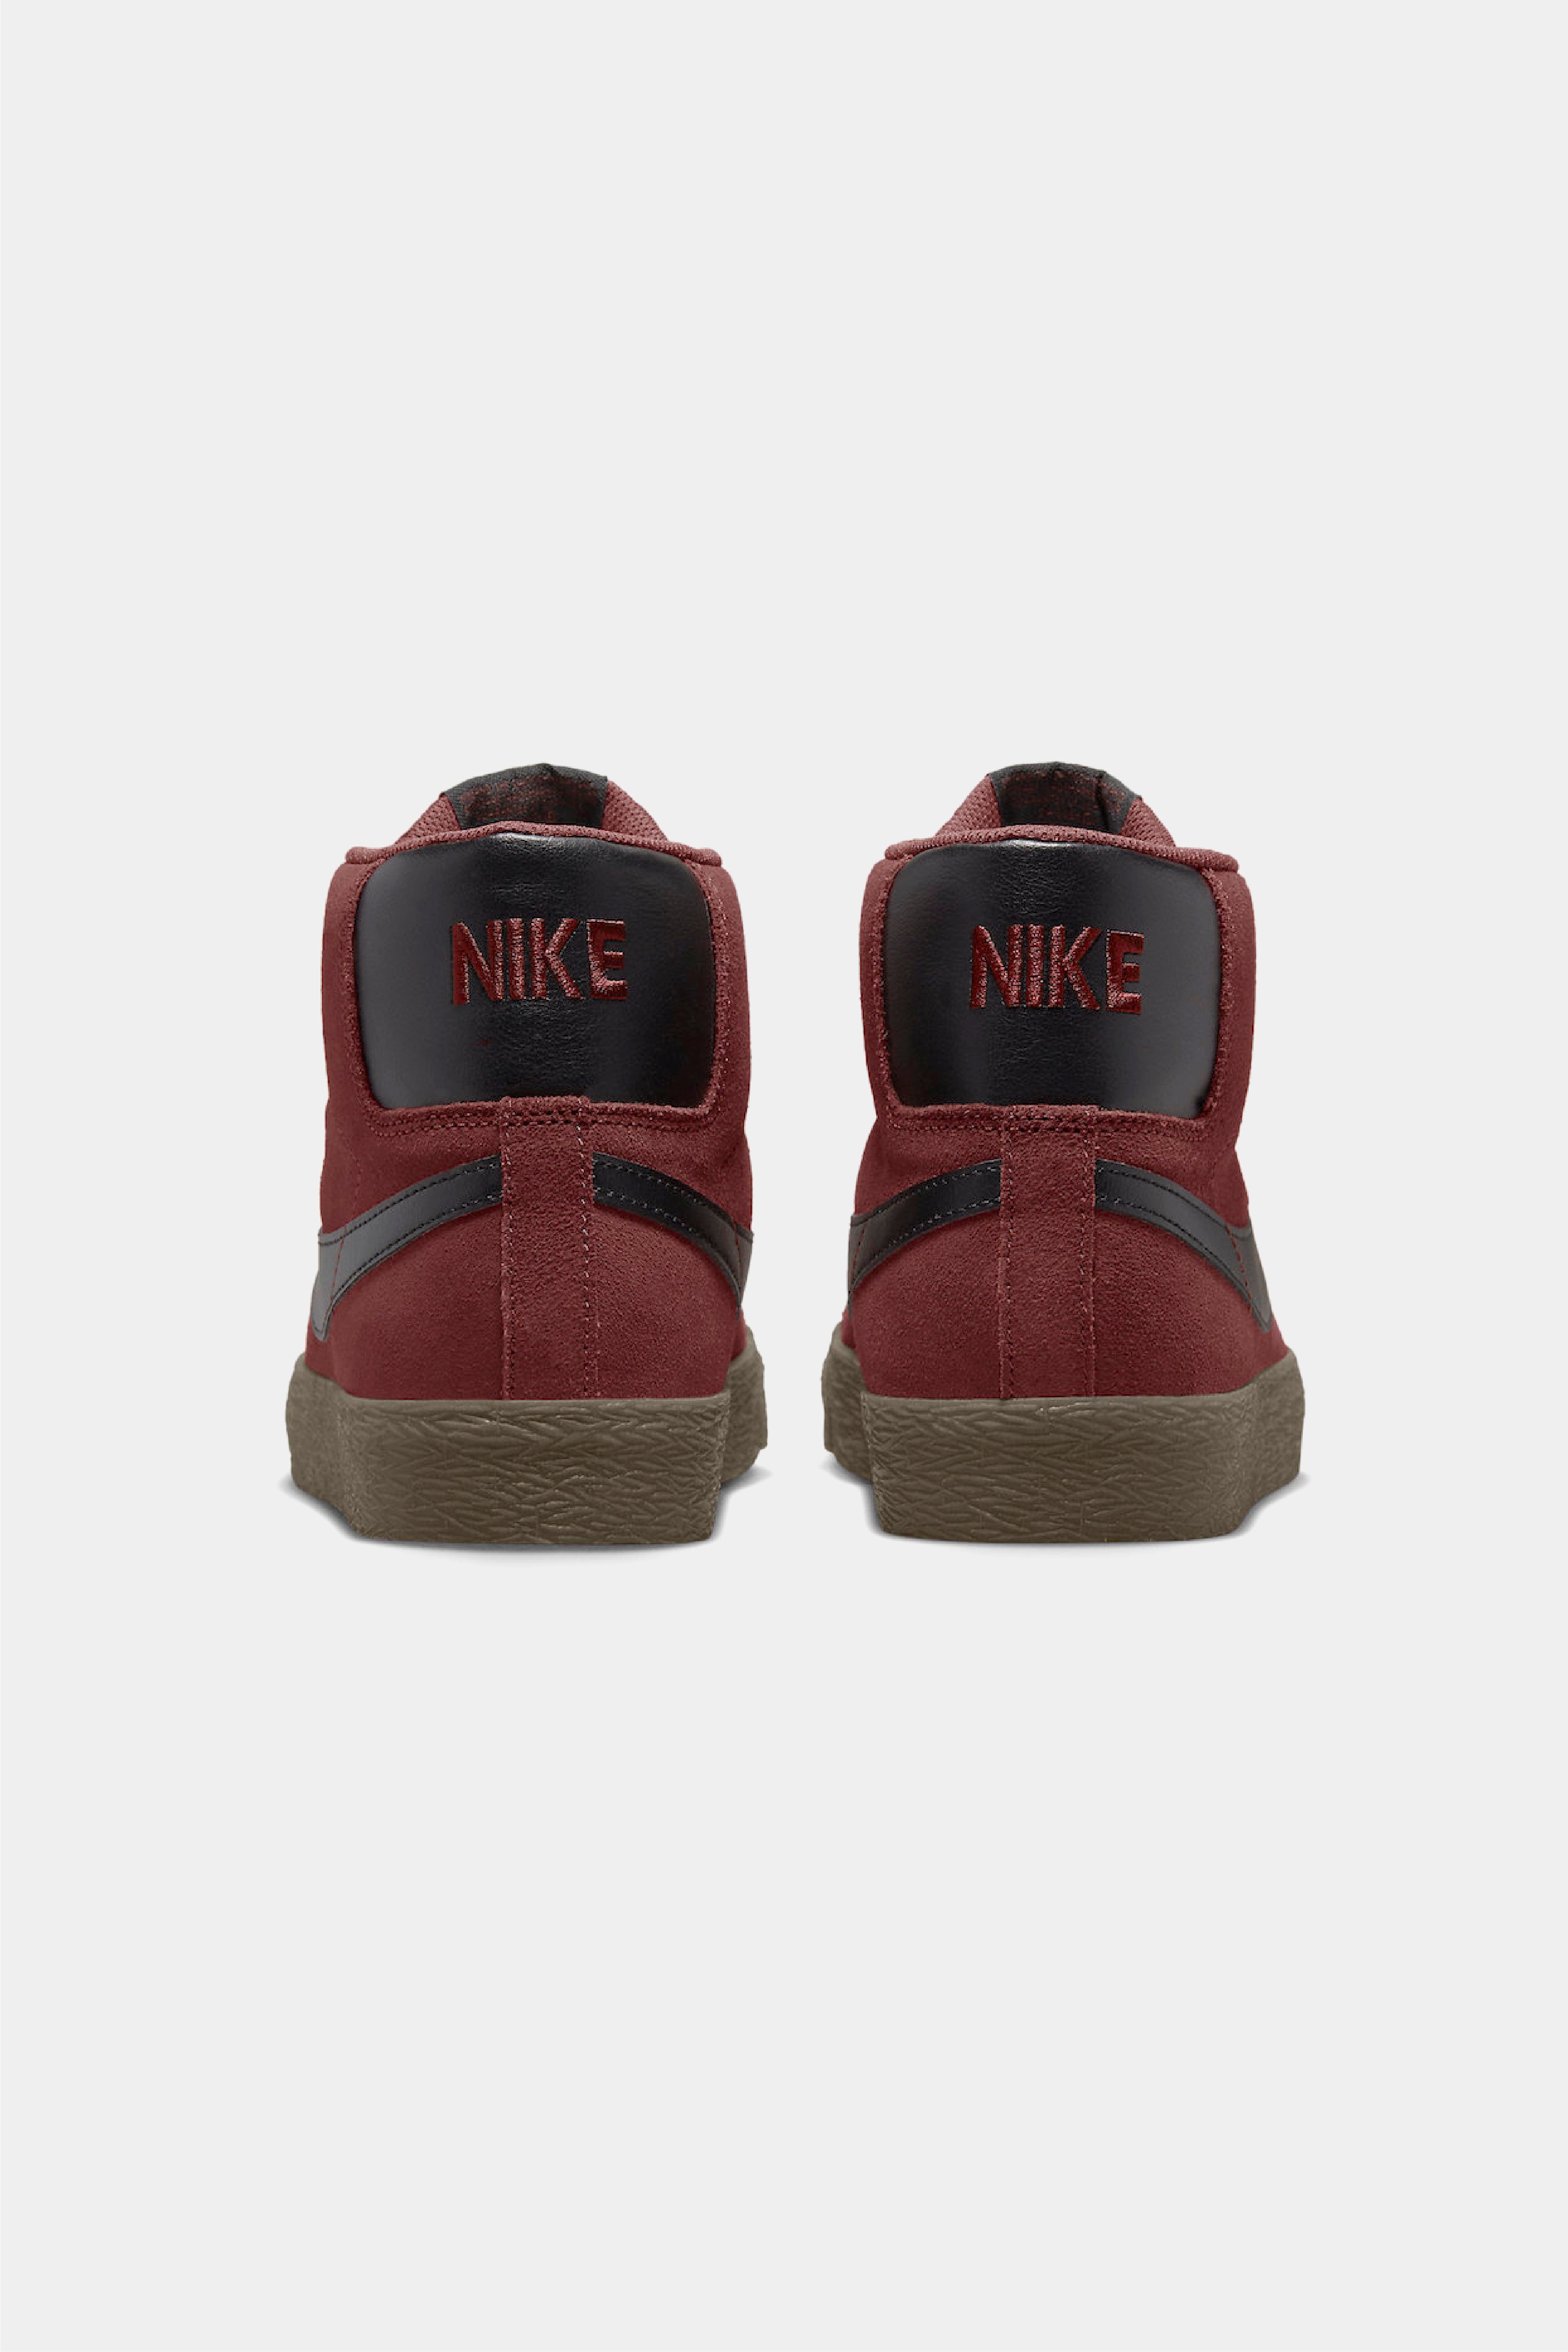 Selectshop FRAME - NIKE SB Nike SB Blazer Mid "Oxen Brown" Footwear Dubai